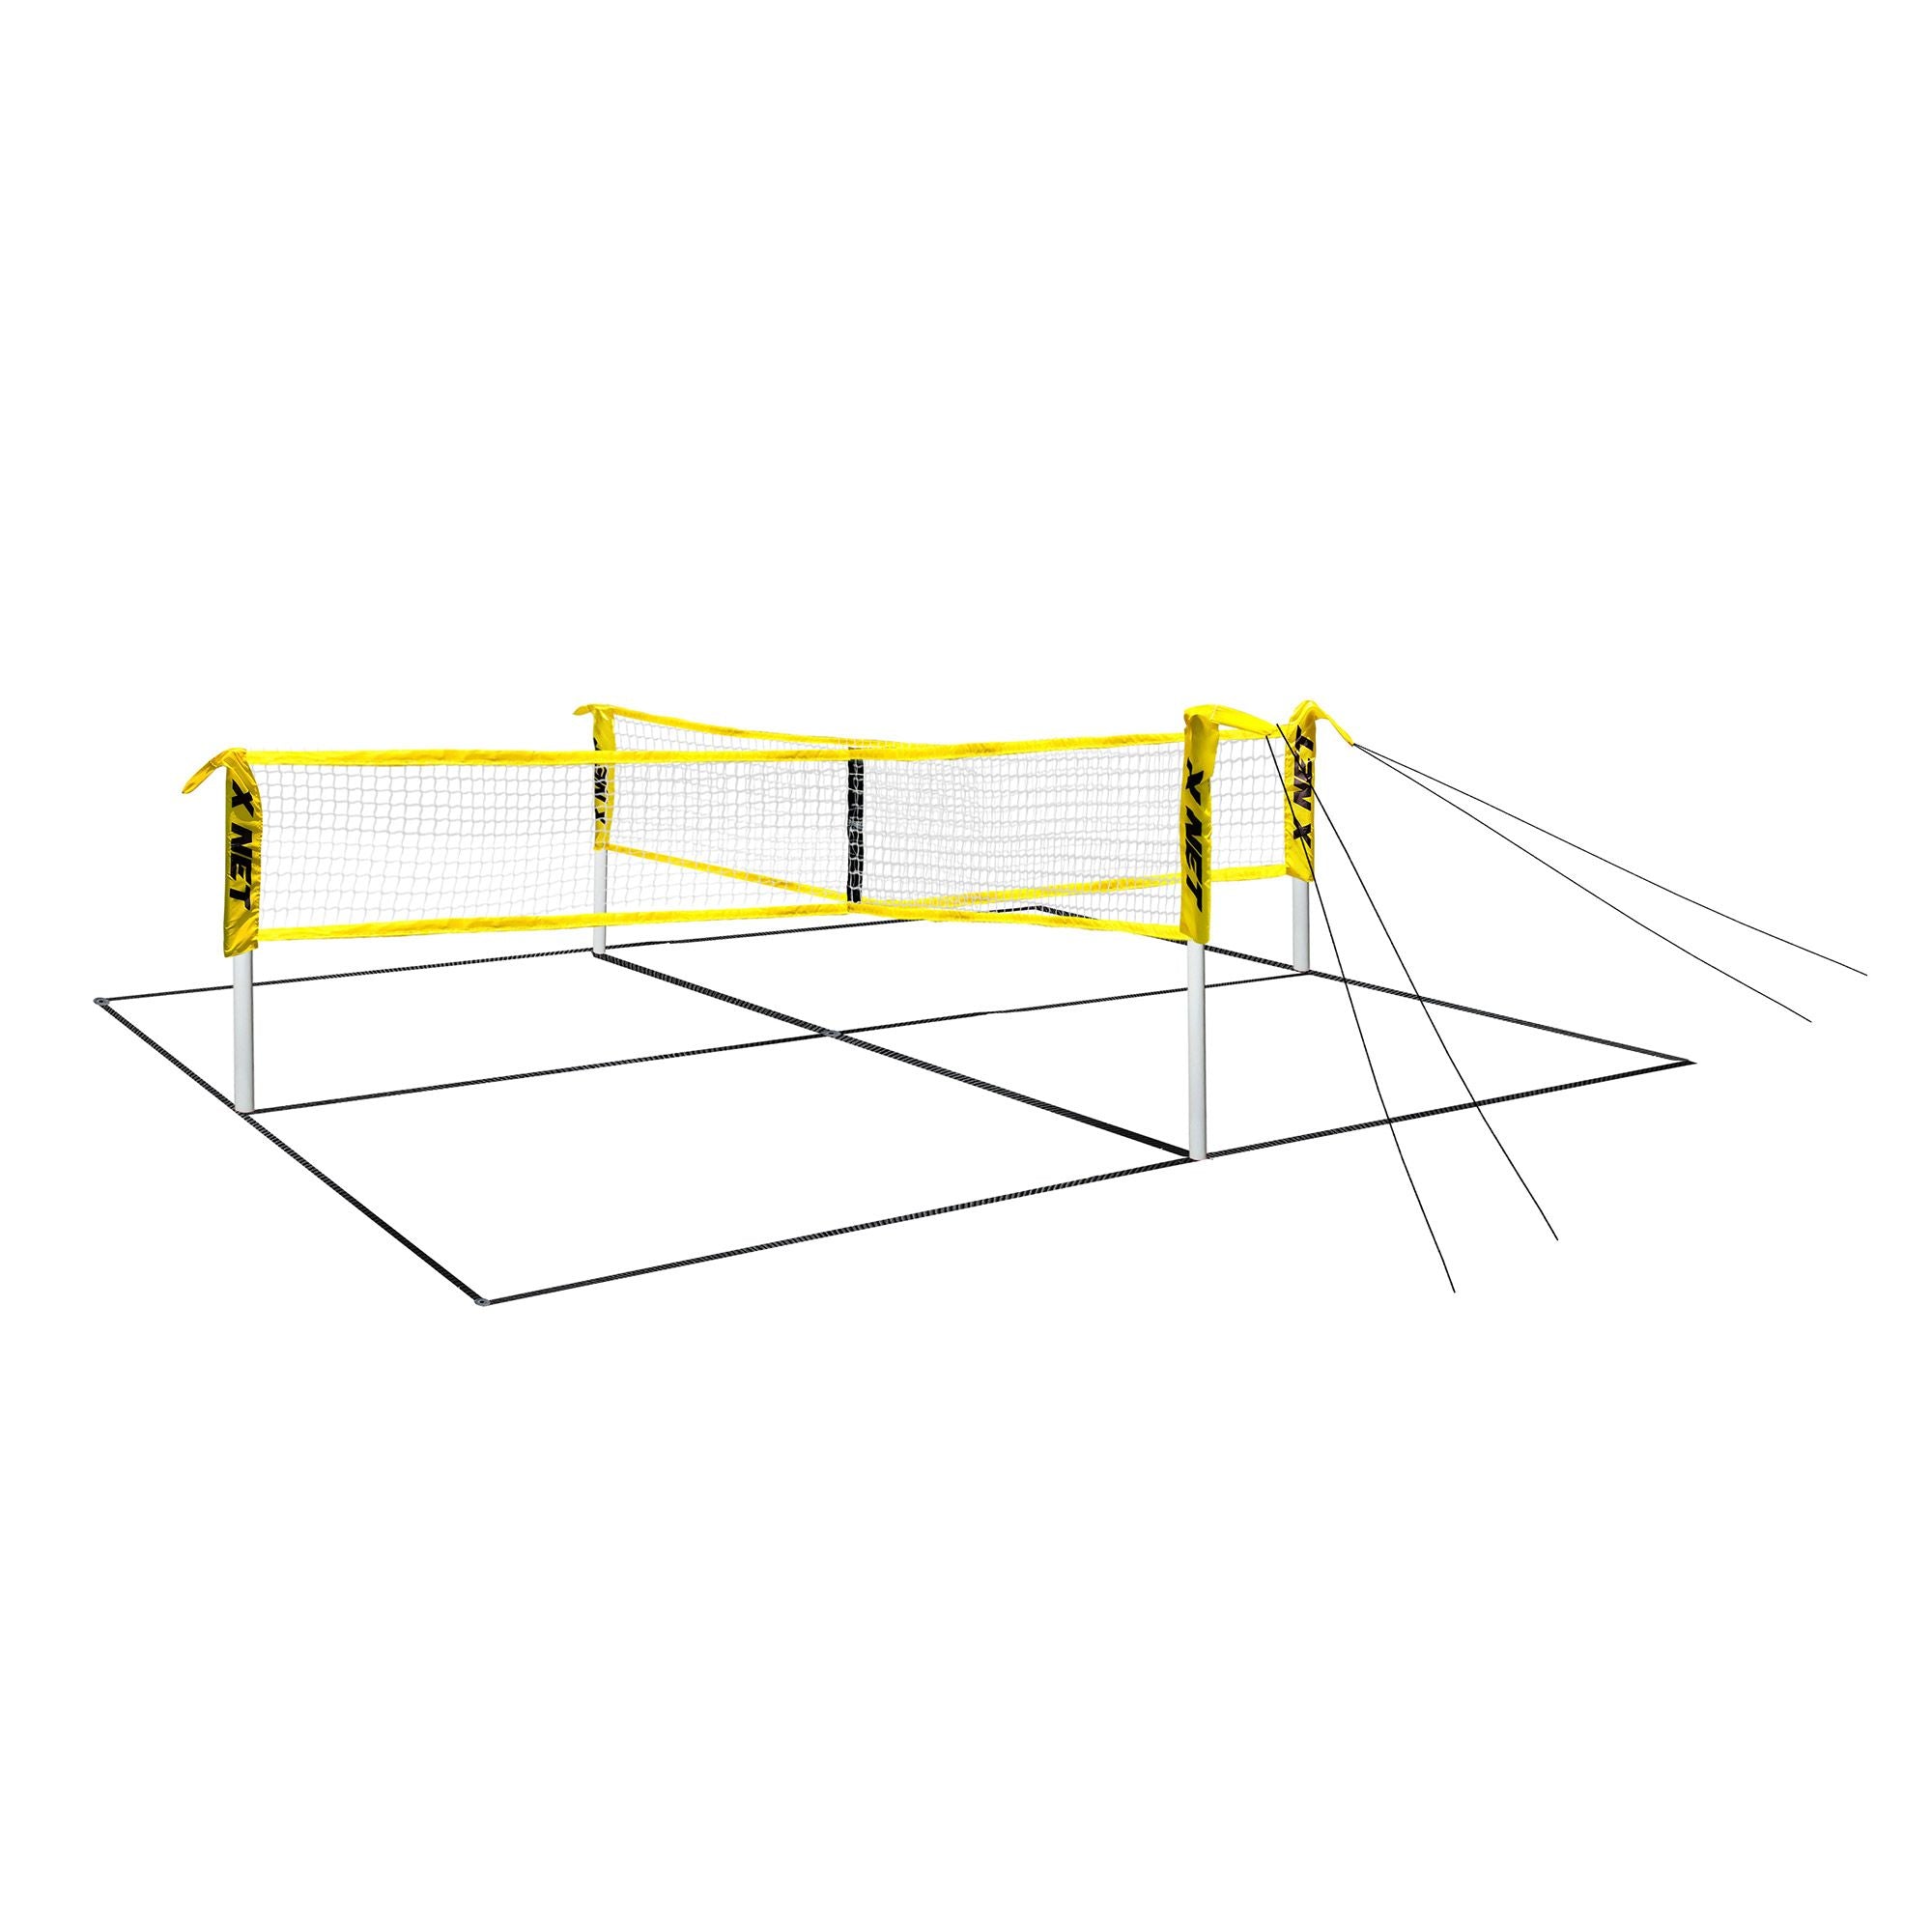 Badminton Net Dimensions & Drawings